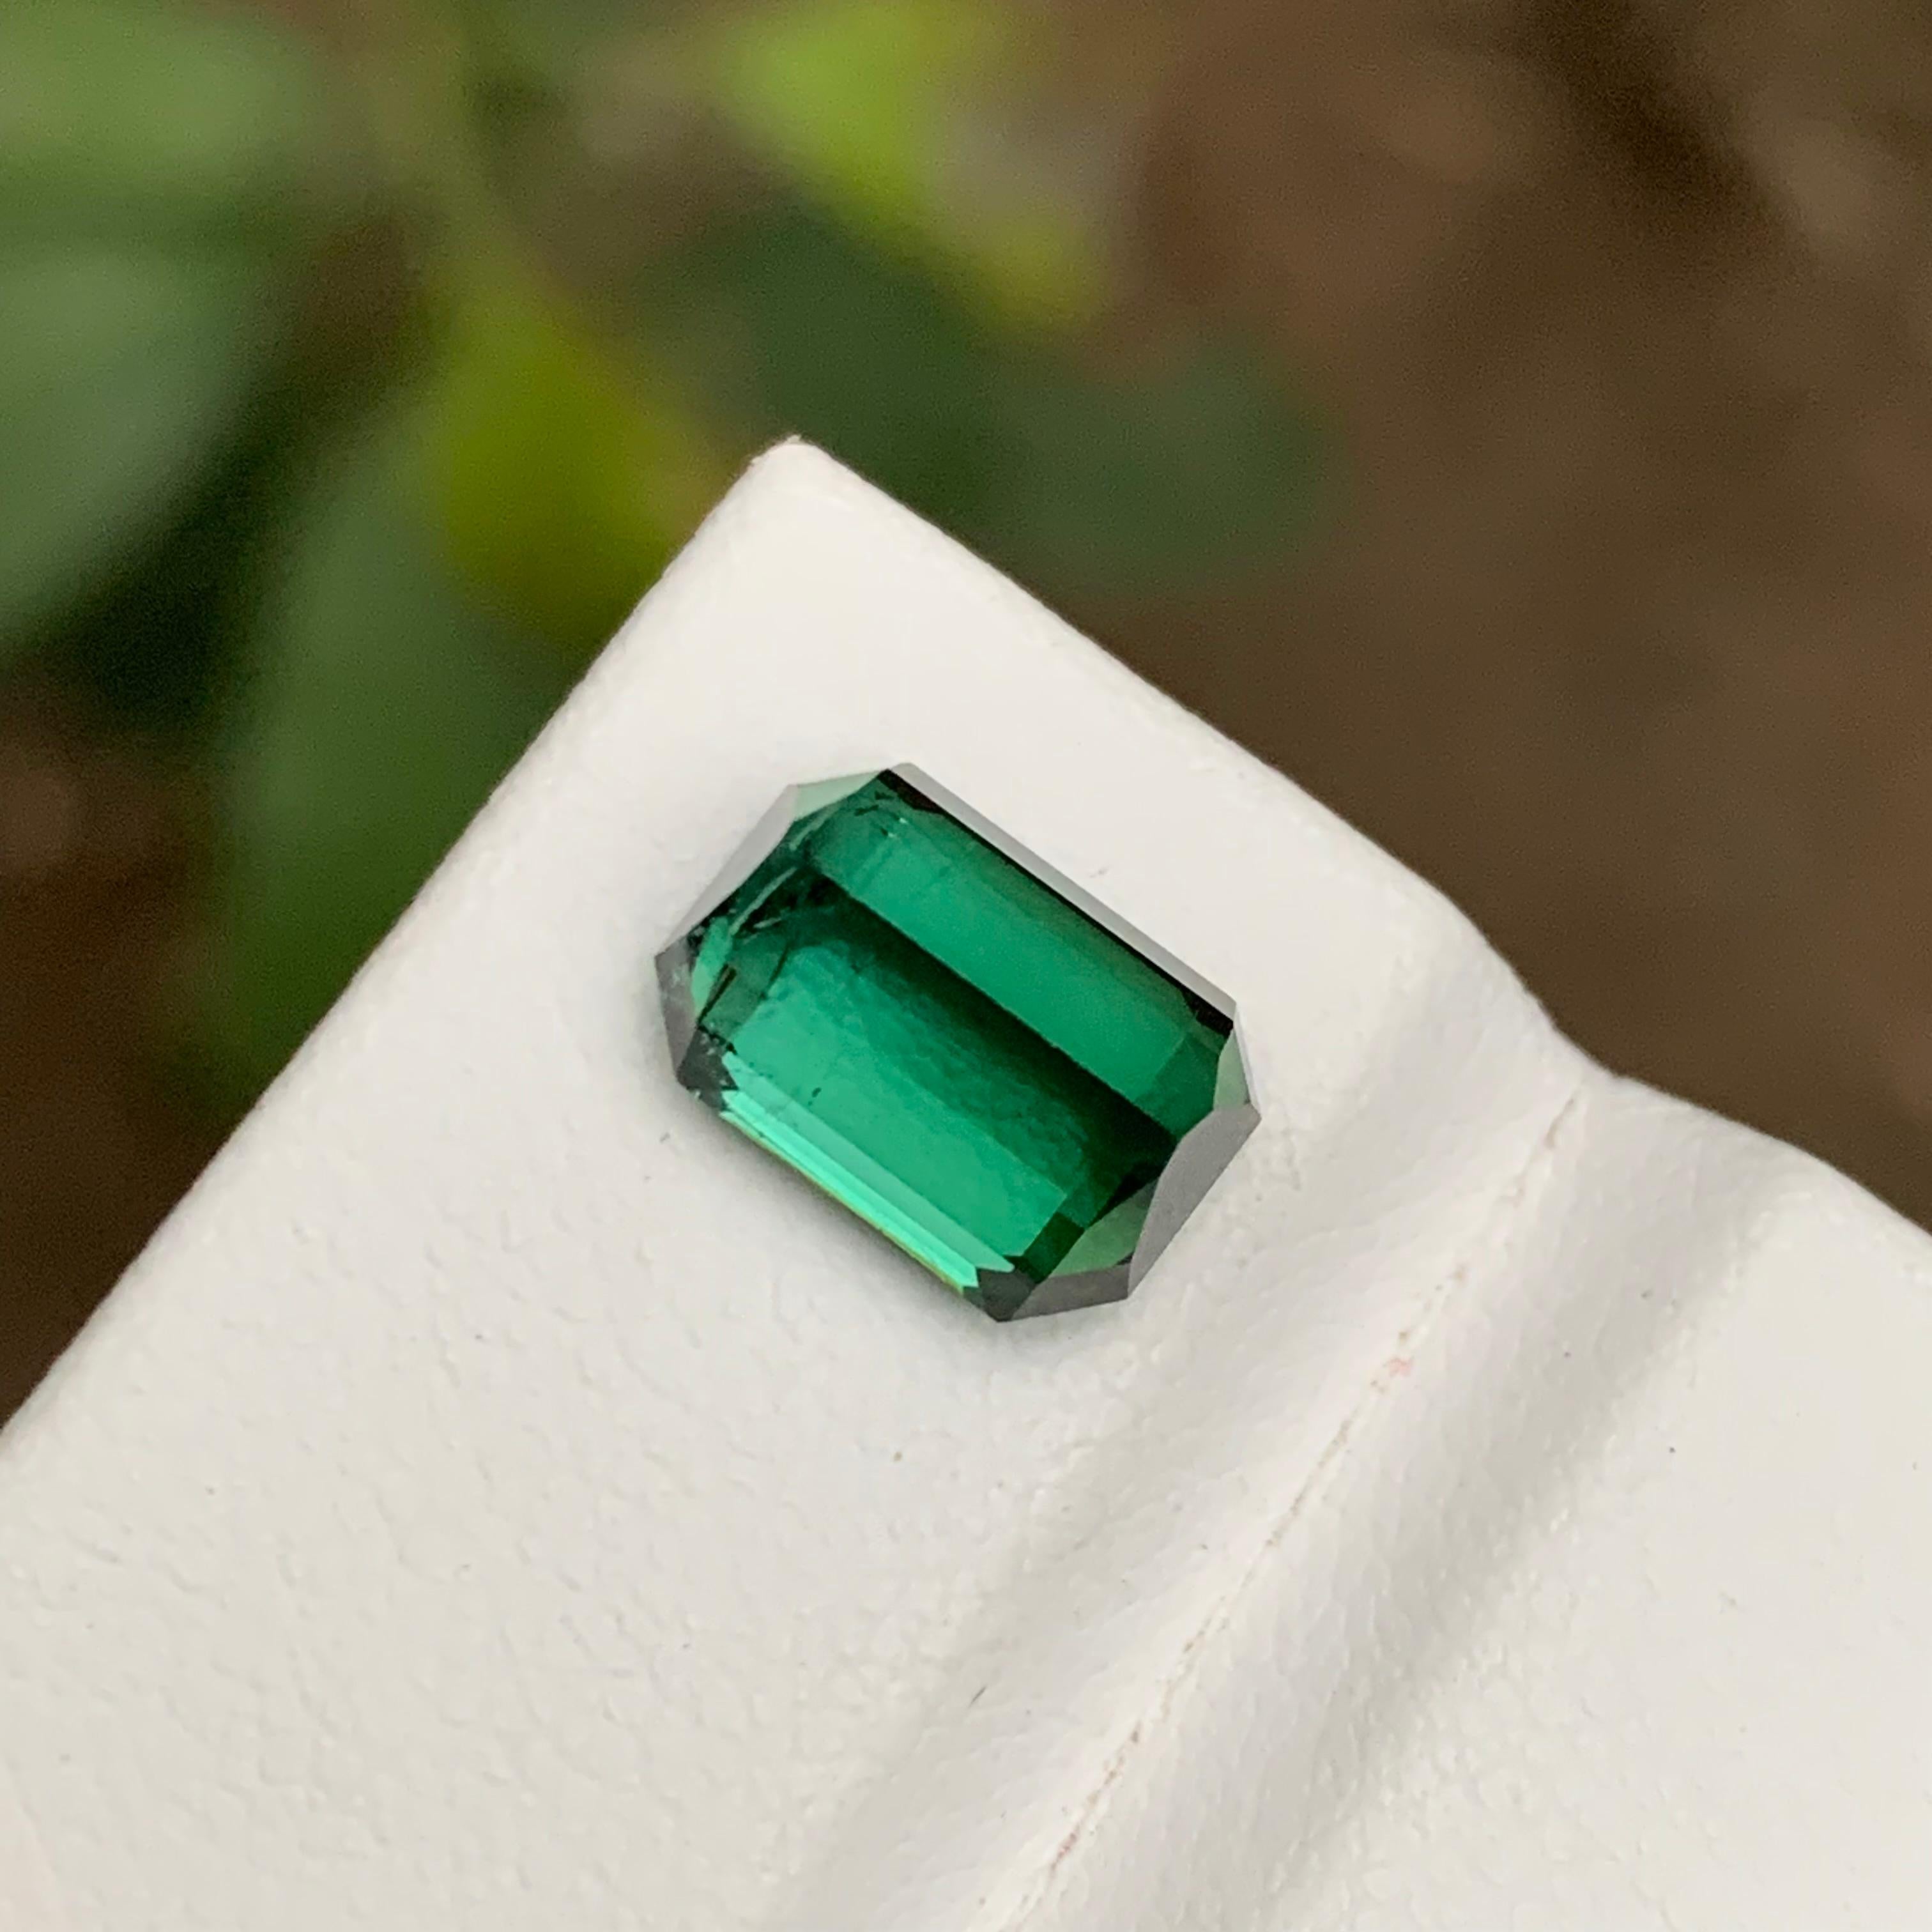 Rare Bluish Green Natural Tourmaline Gemstone 3.15Ct Emerald Cut for RingPendant For Sale 3